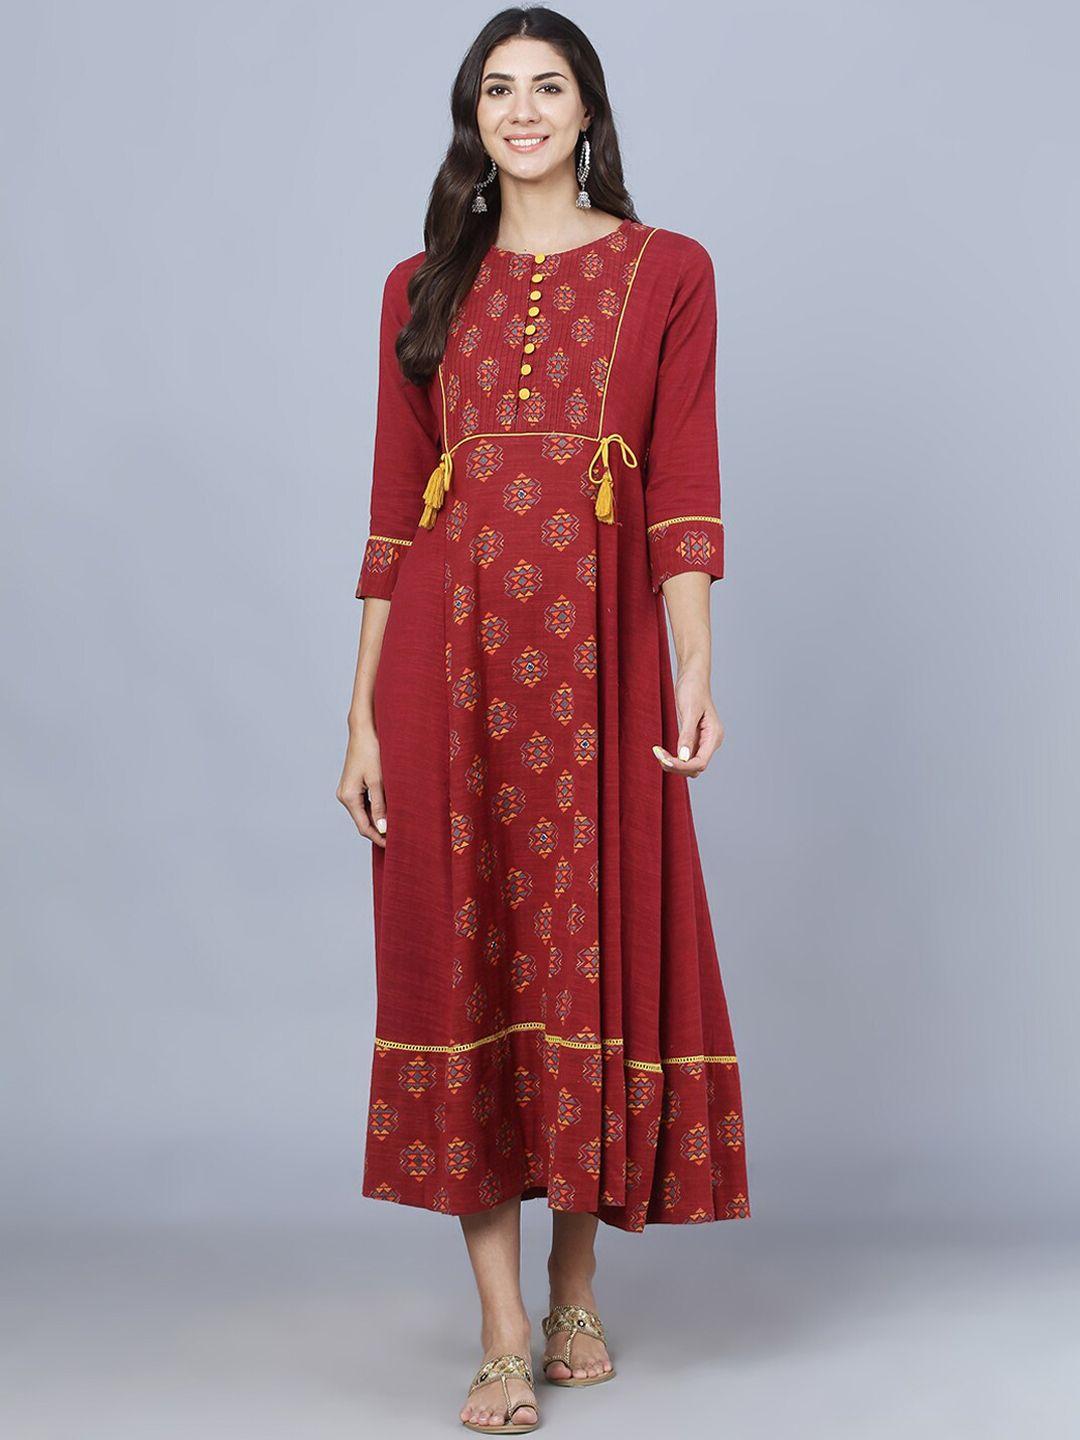 daamina women maroon printed ethnic dress